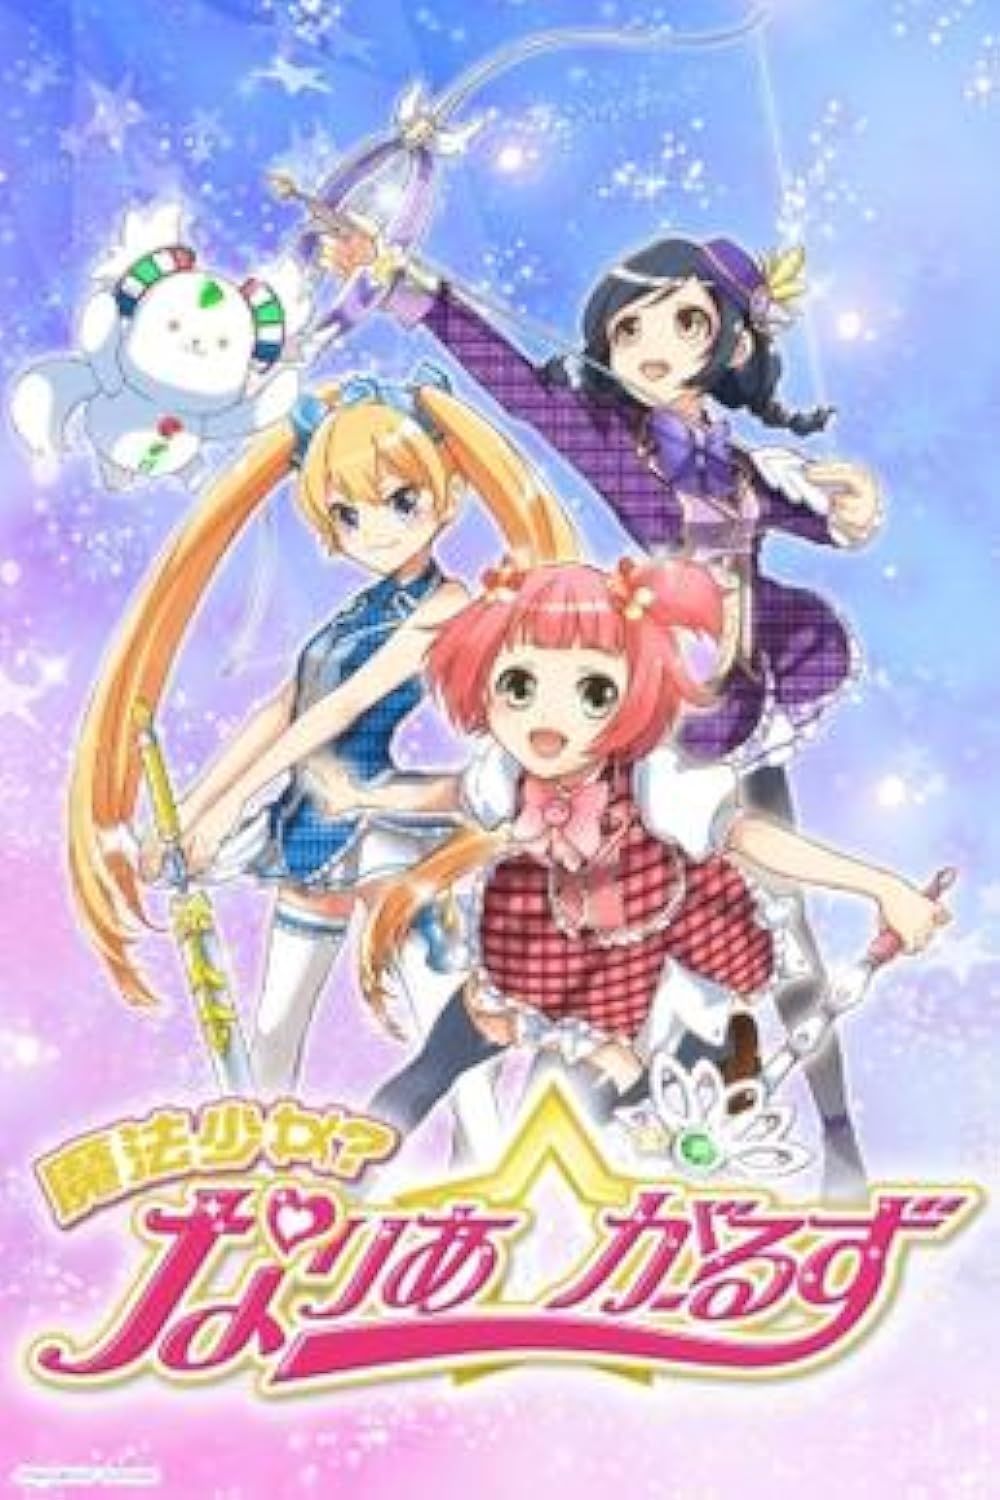 Urara, Hanabi, and Inaho wield their weapons in the Mahou Shoujo Naria Girls anime poster